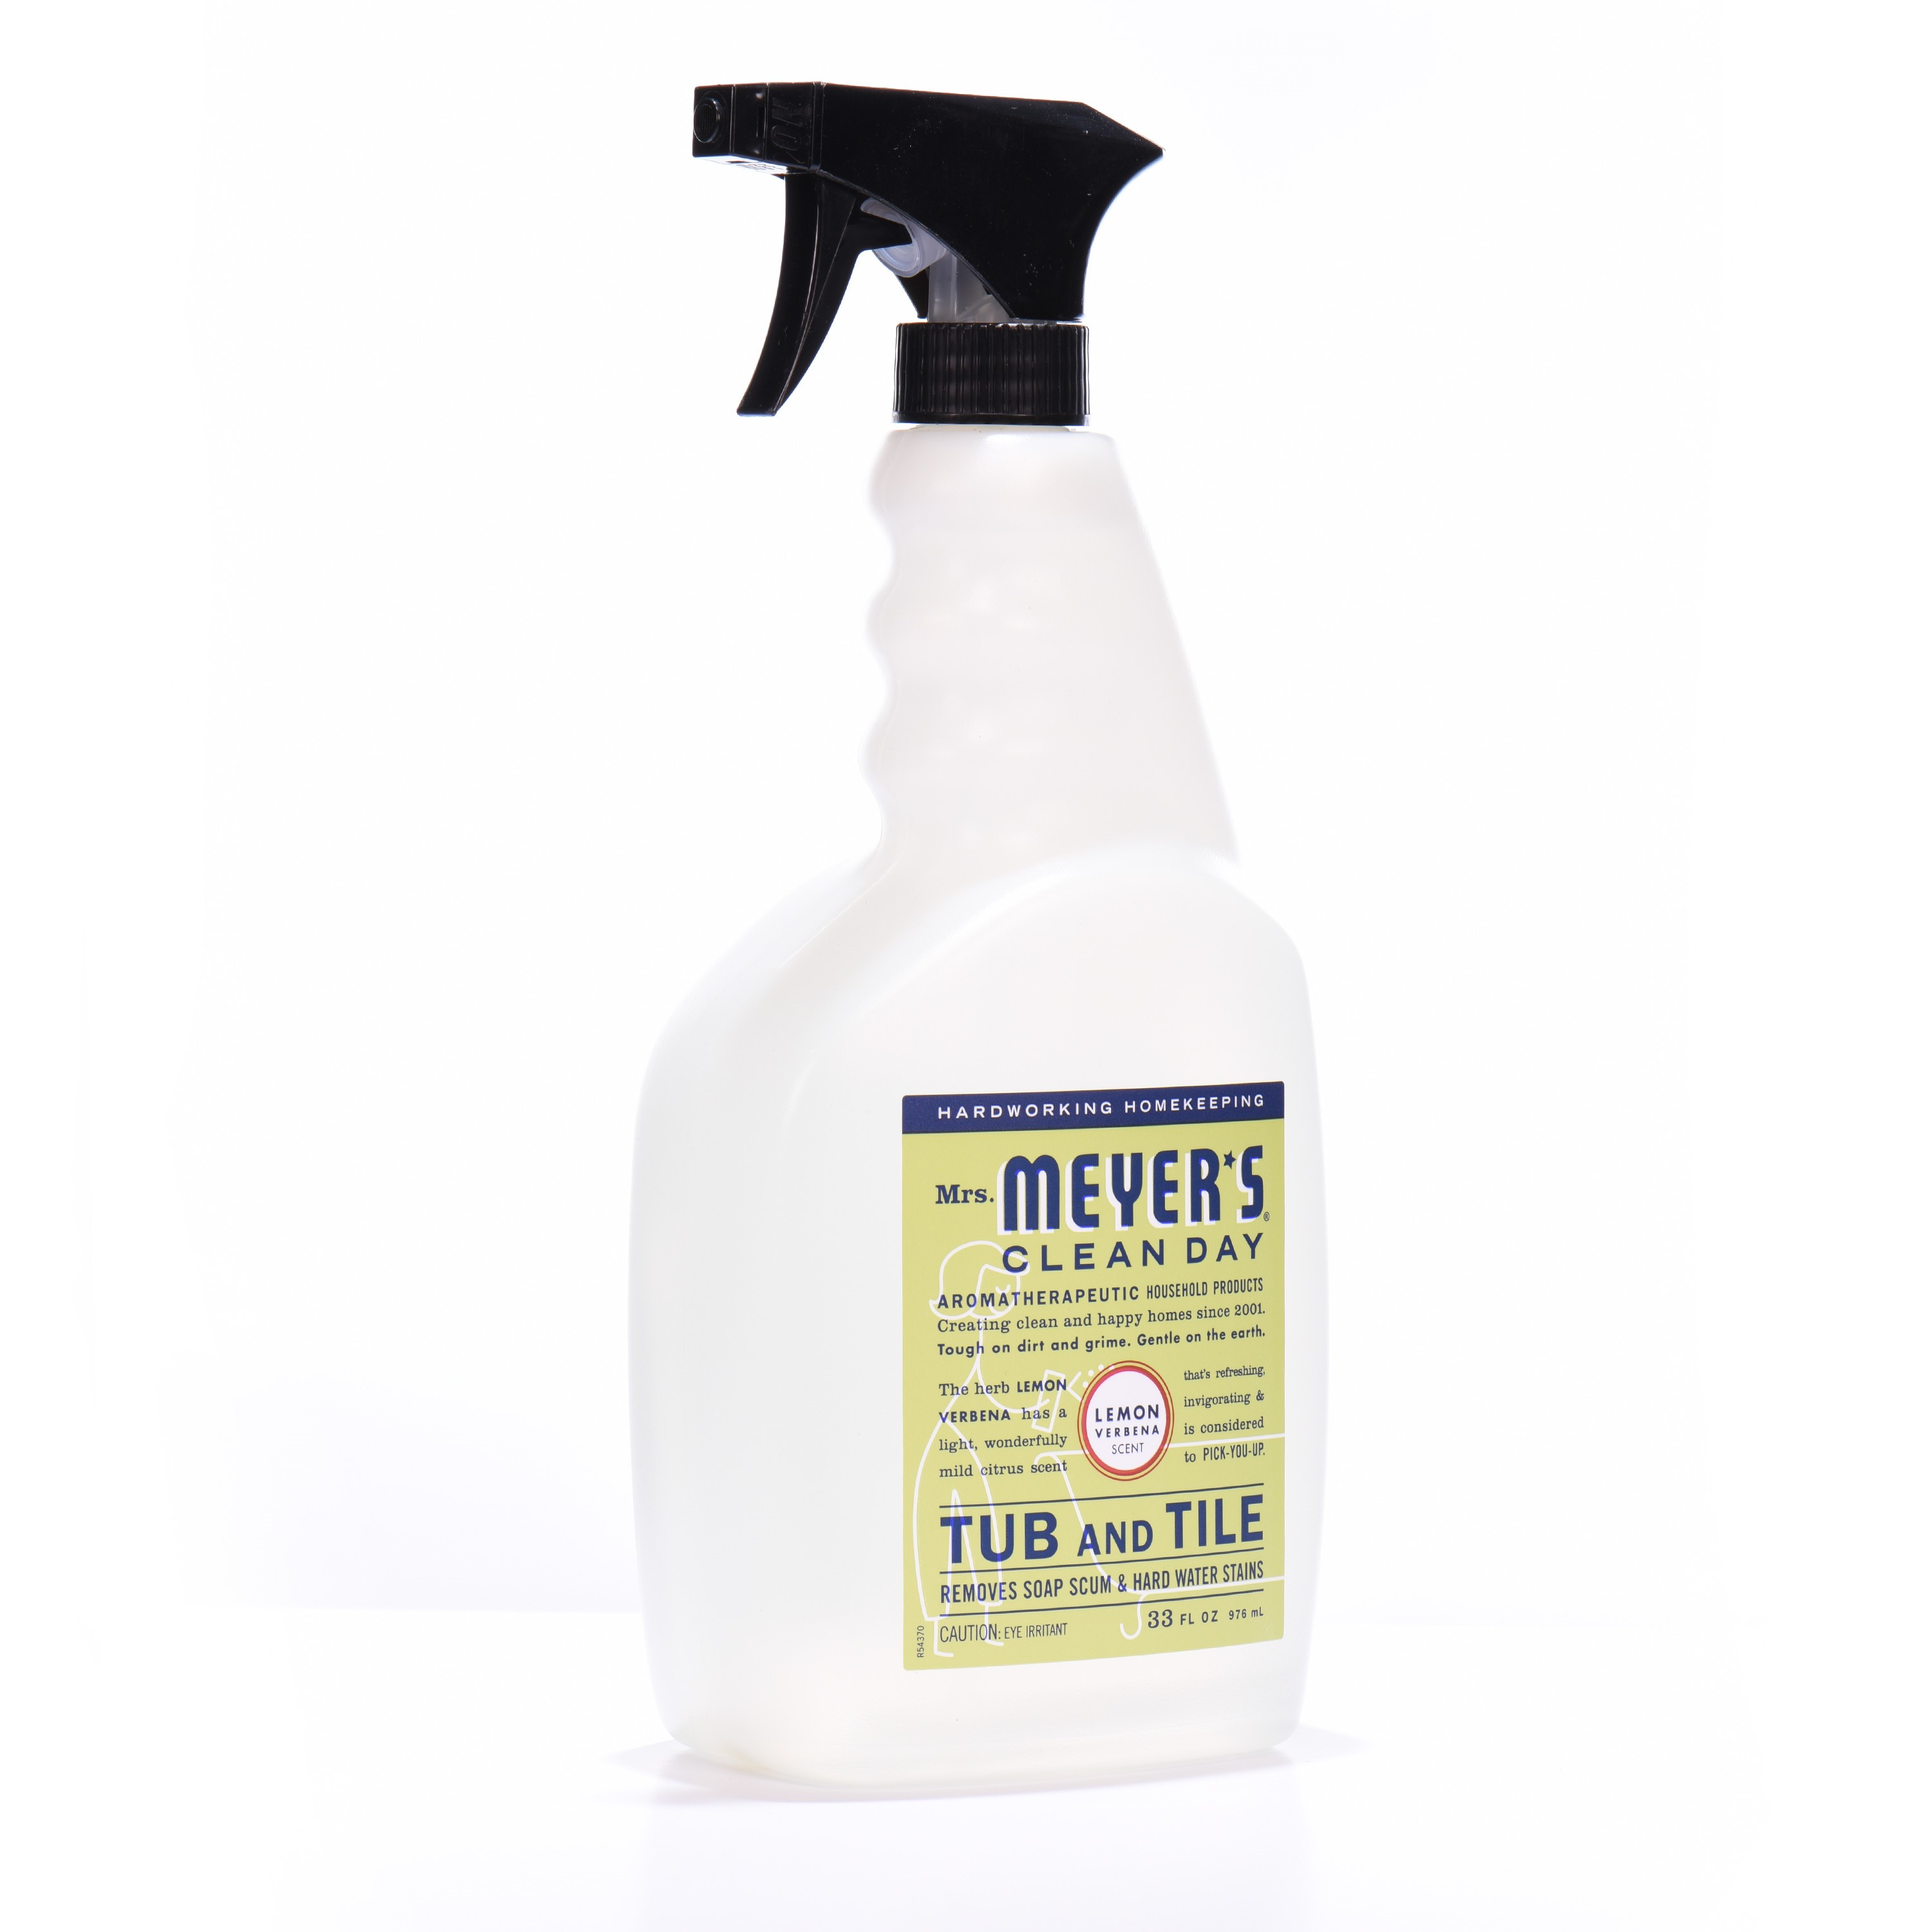 Mrs. Meyer's Clean Day Tub and Tile Bathroom Cleaner, Lemon Verbena, 33 oz - image 2 of 4